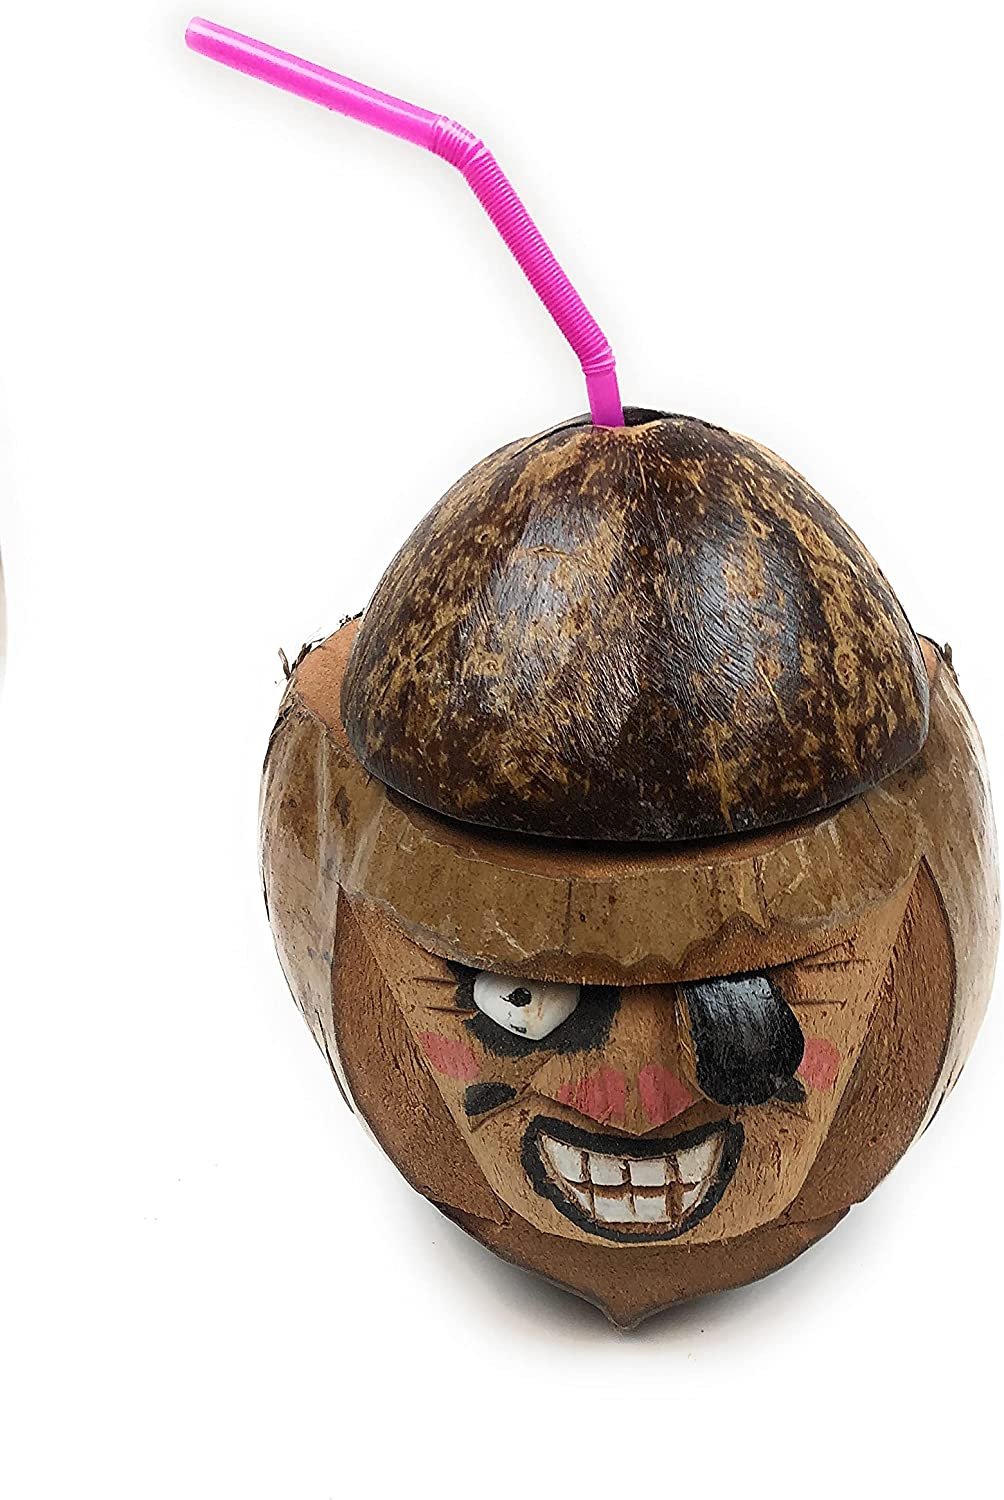 authentic pirate coconut head